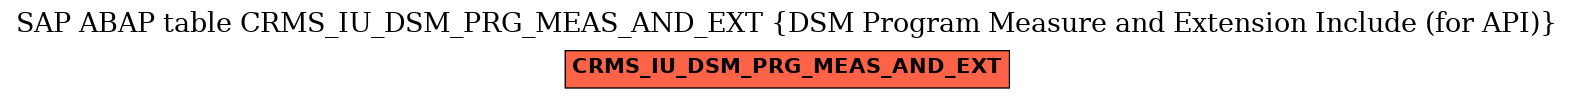 E-R Diagram for table CRMS_IU_DSM_PRG_MEAS_AND_EXT (DSM Program Measure and Extension Include (for API))